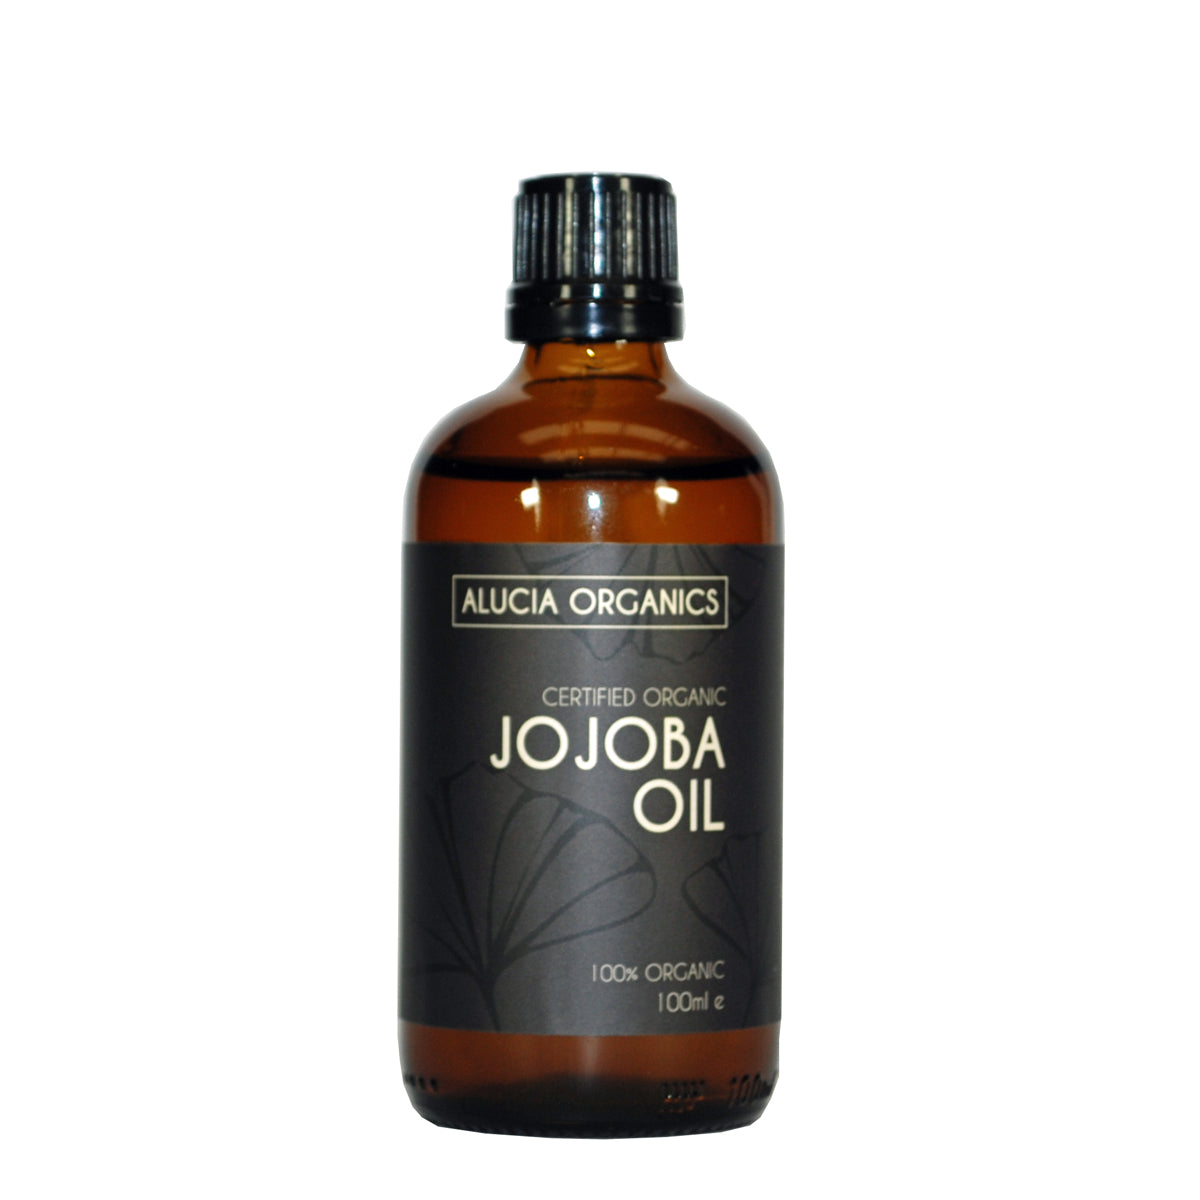 Alucia-Organics-Certified-Organic-Jojoba-Oil-100ml